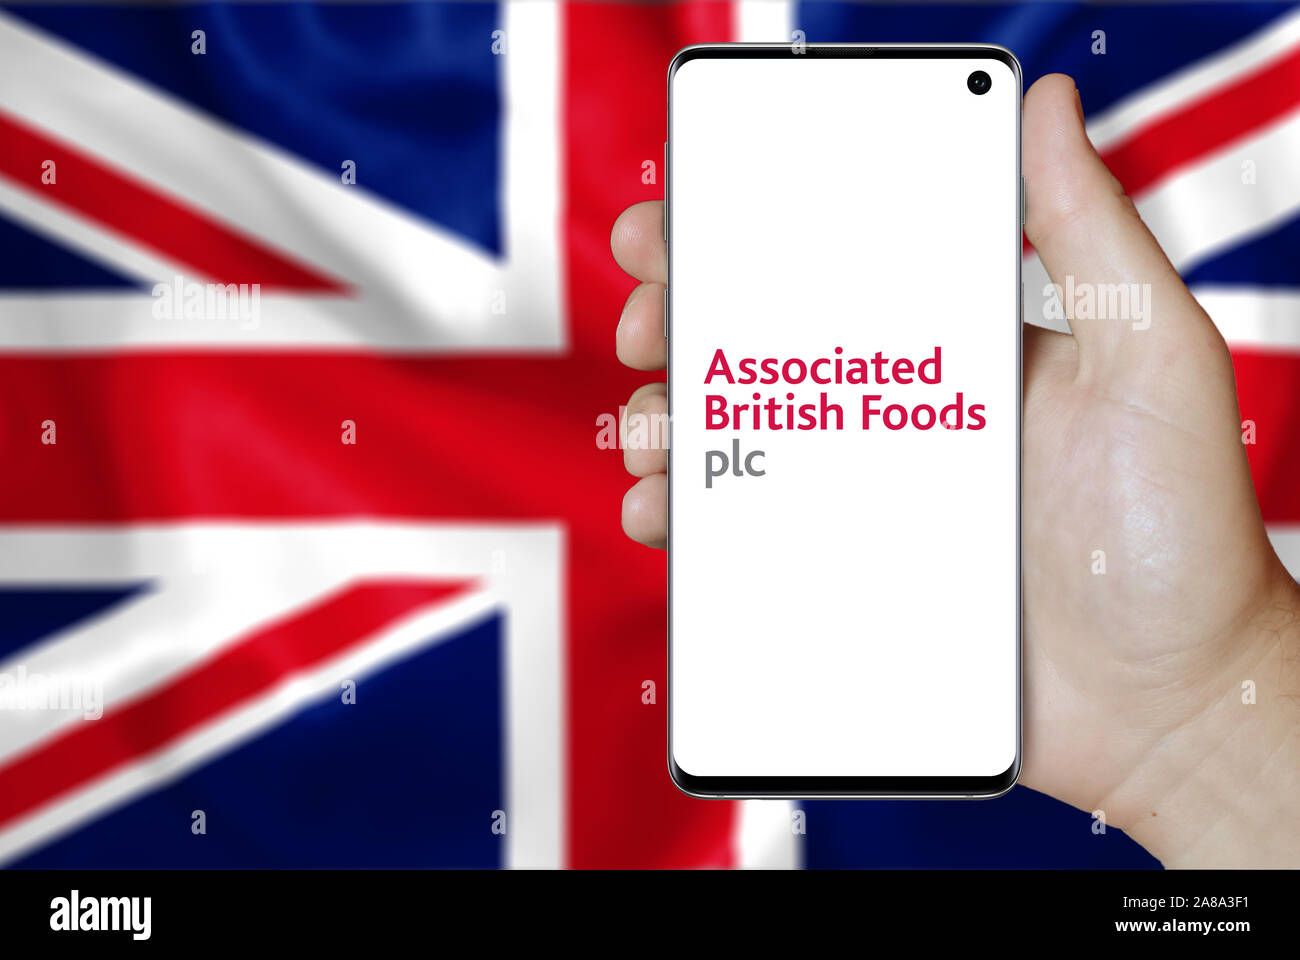 Logo of public company Associated British Foods displayed on a smartphone. Flag of UK background. Credit: PIXDUCE Stock Photo